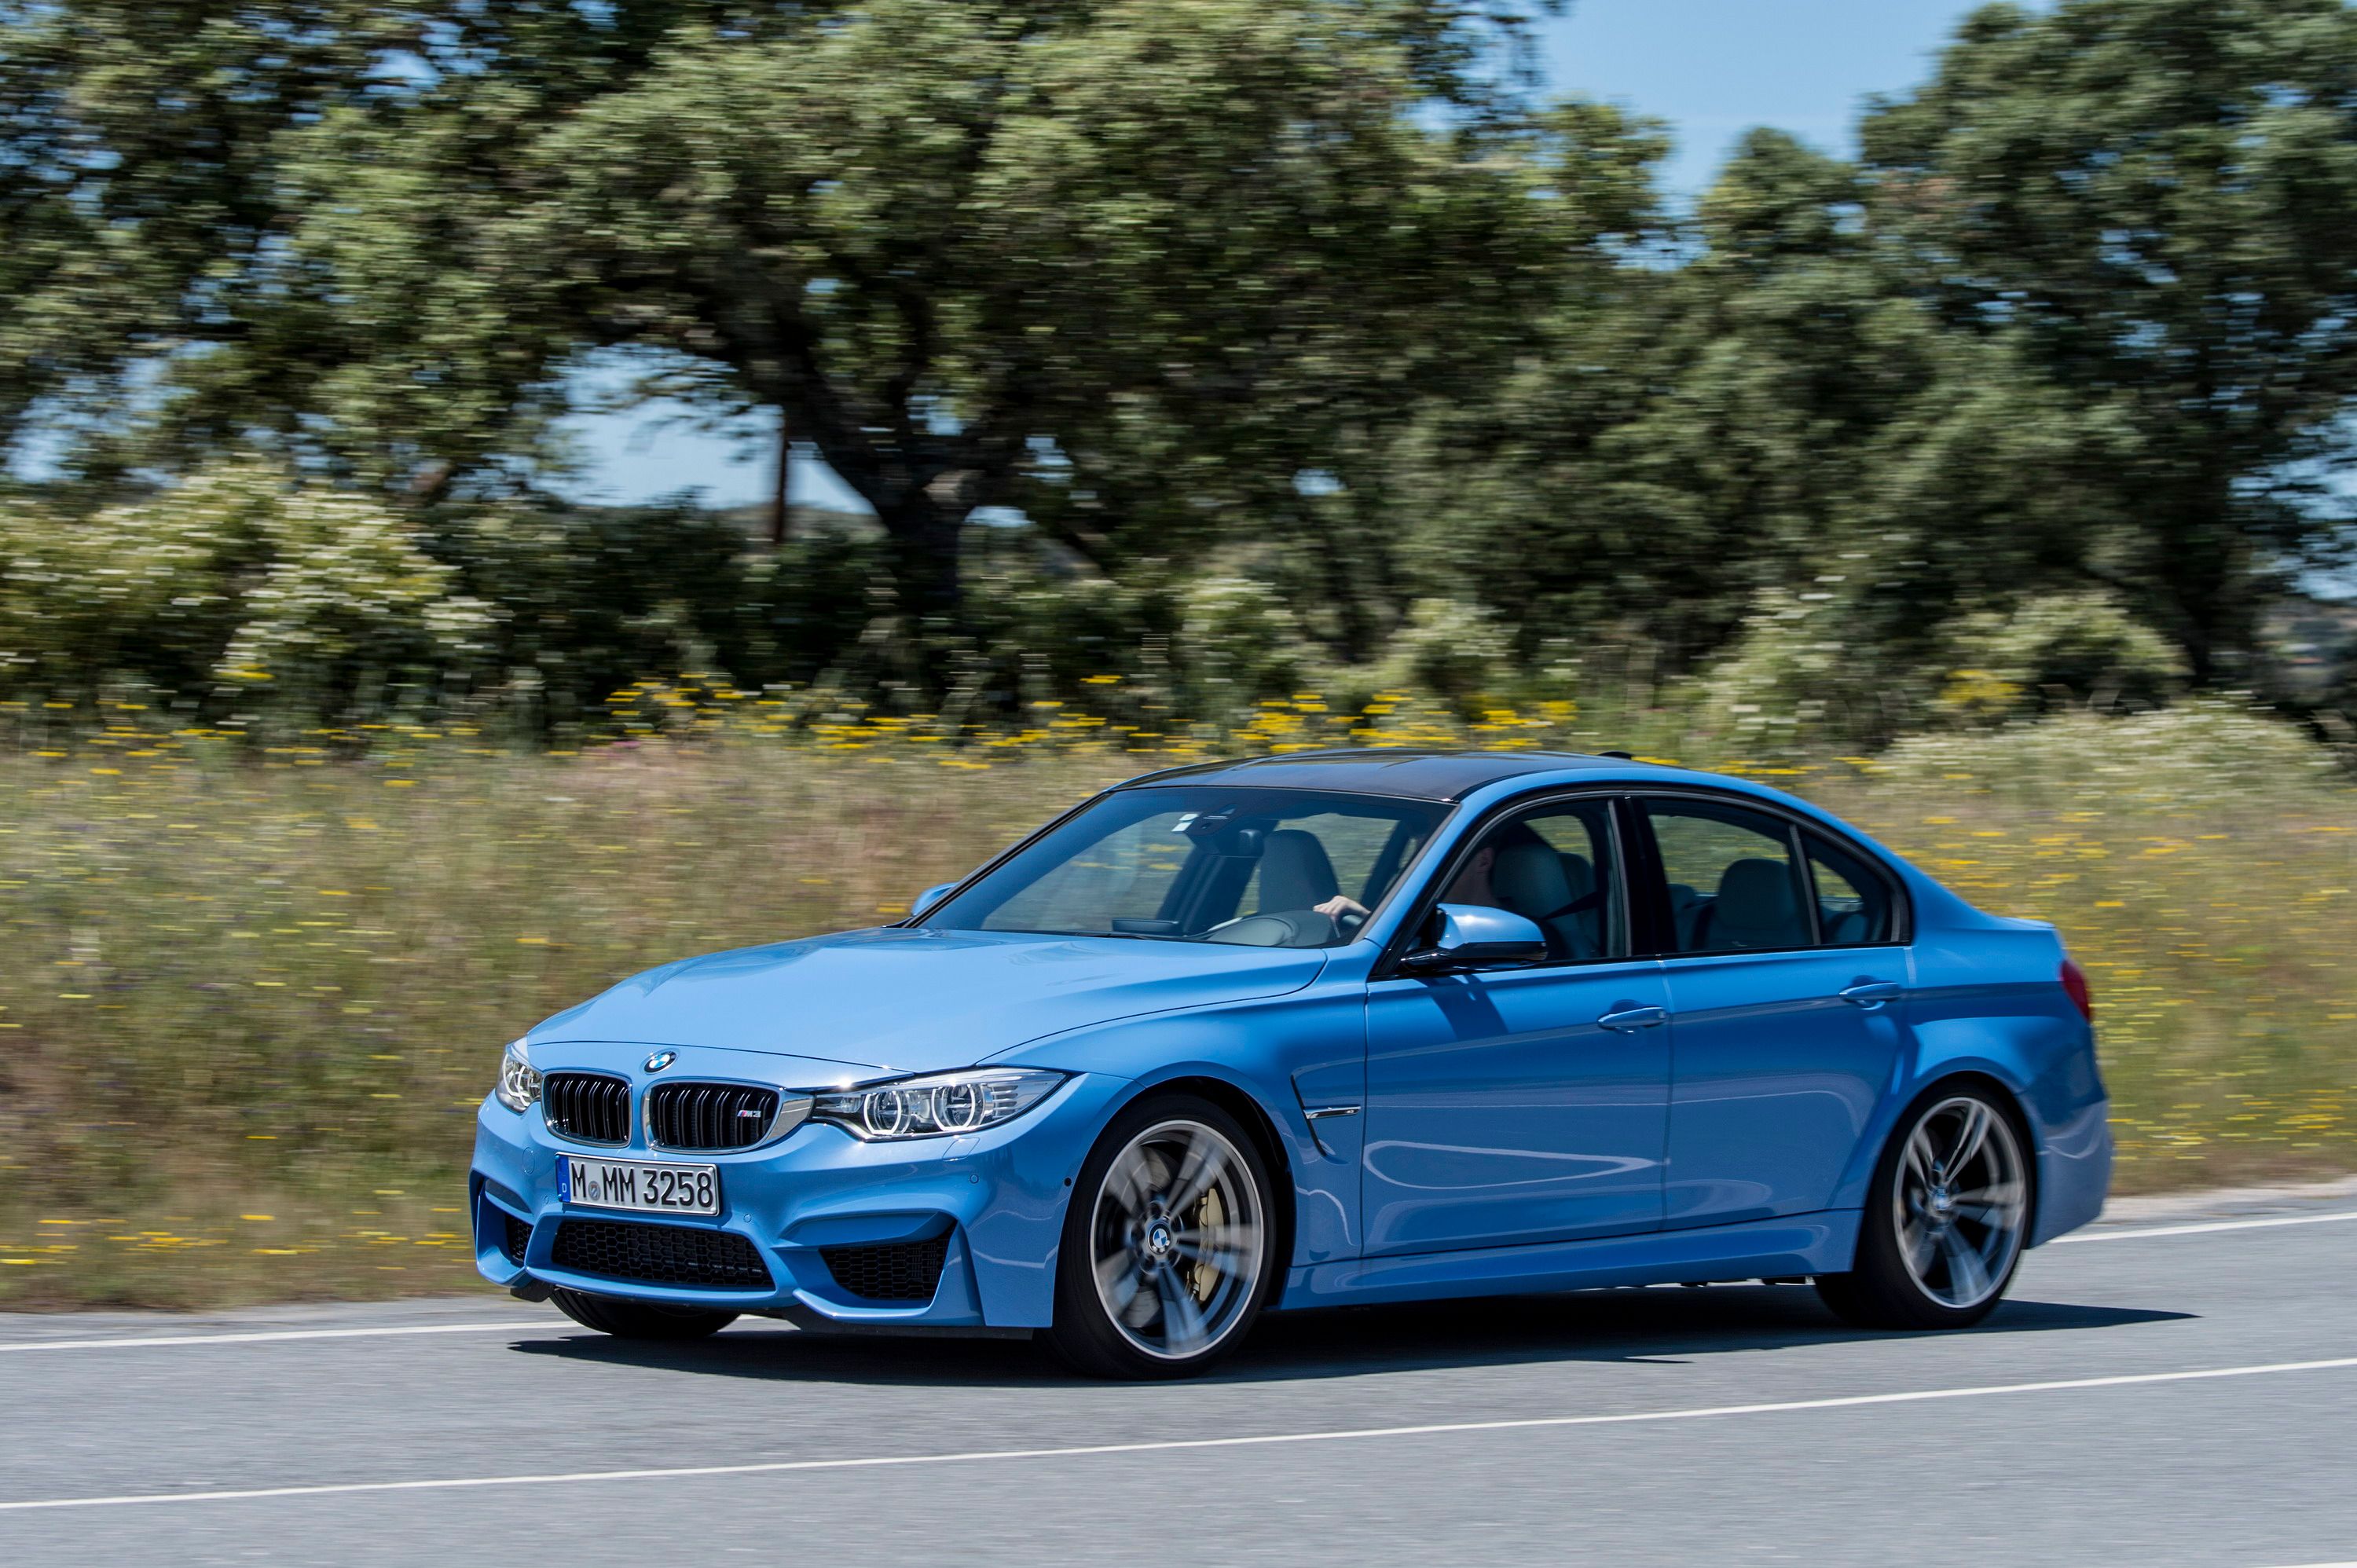 2015 Video: Chris Harris Reviews the New BMW M3